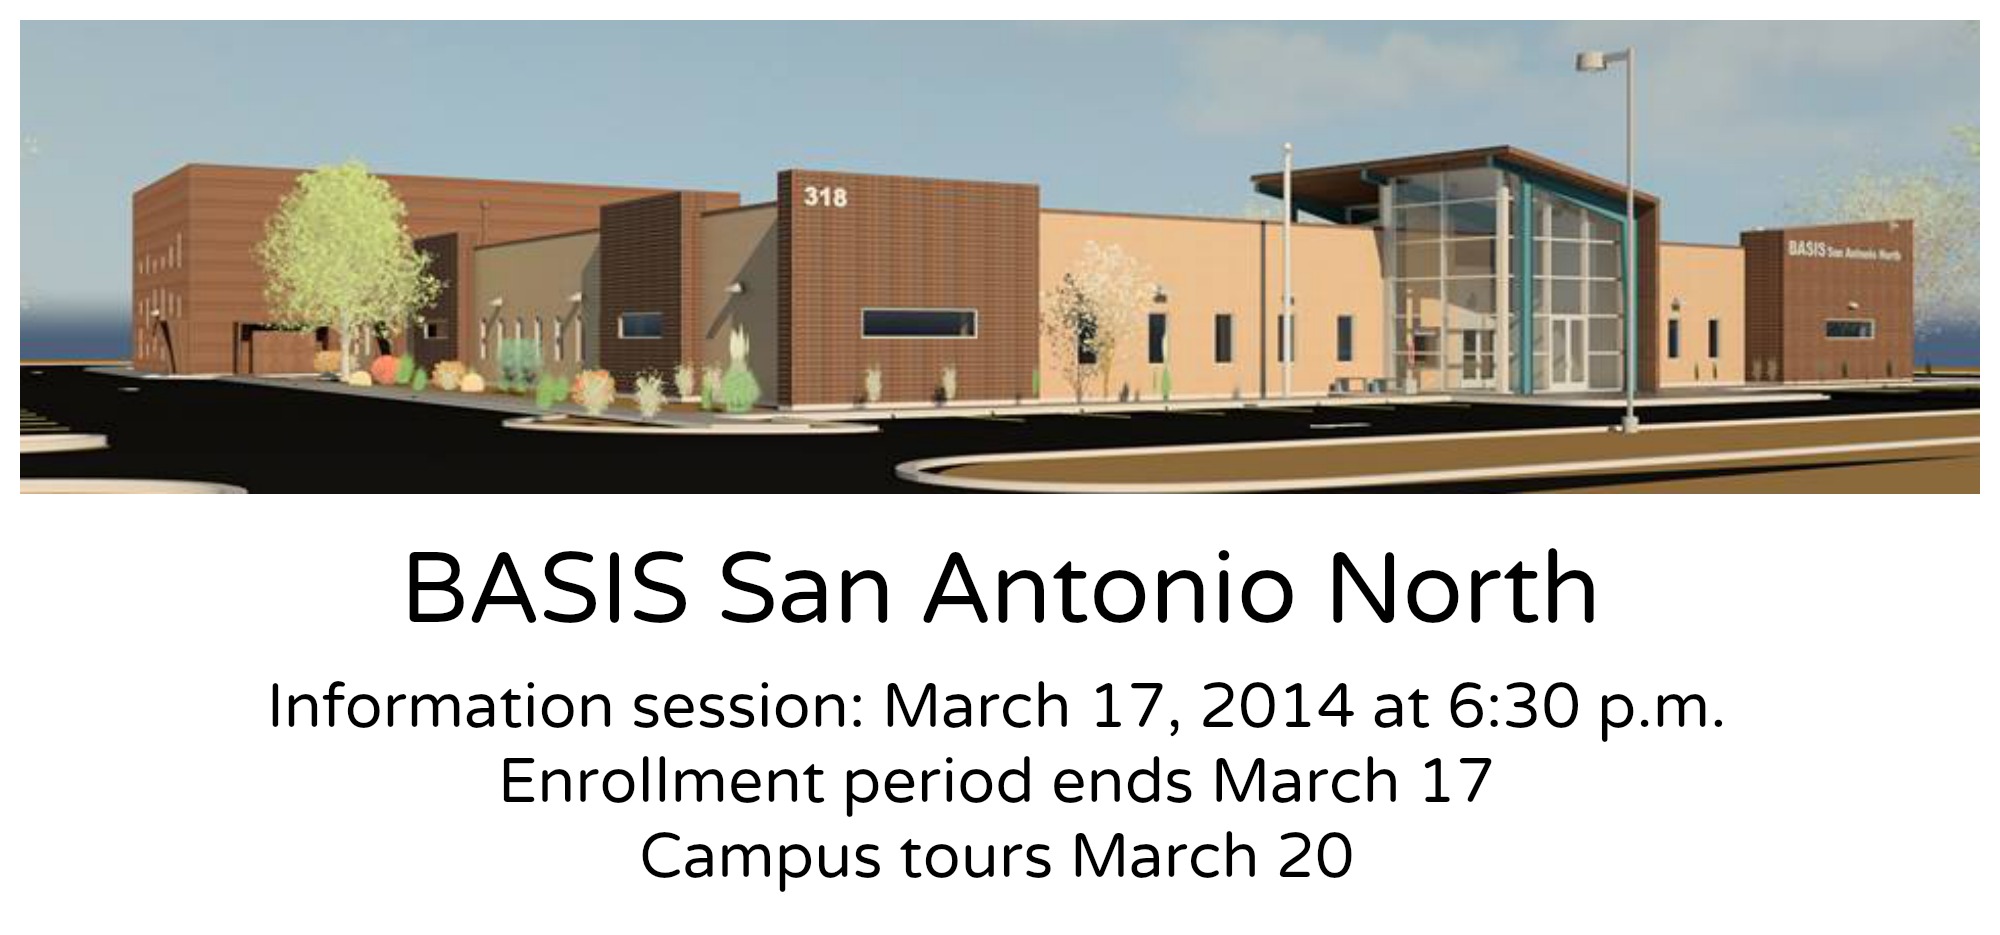 BASIS San Antonio North info session March 17, 2014 at 6:30 p.m. | San Antonio Charter Moms